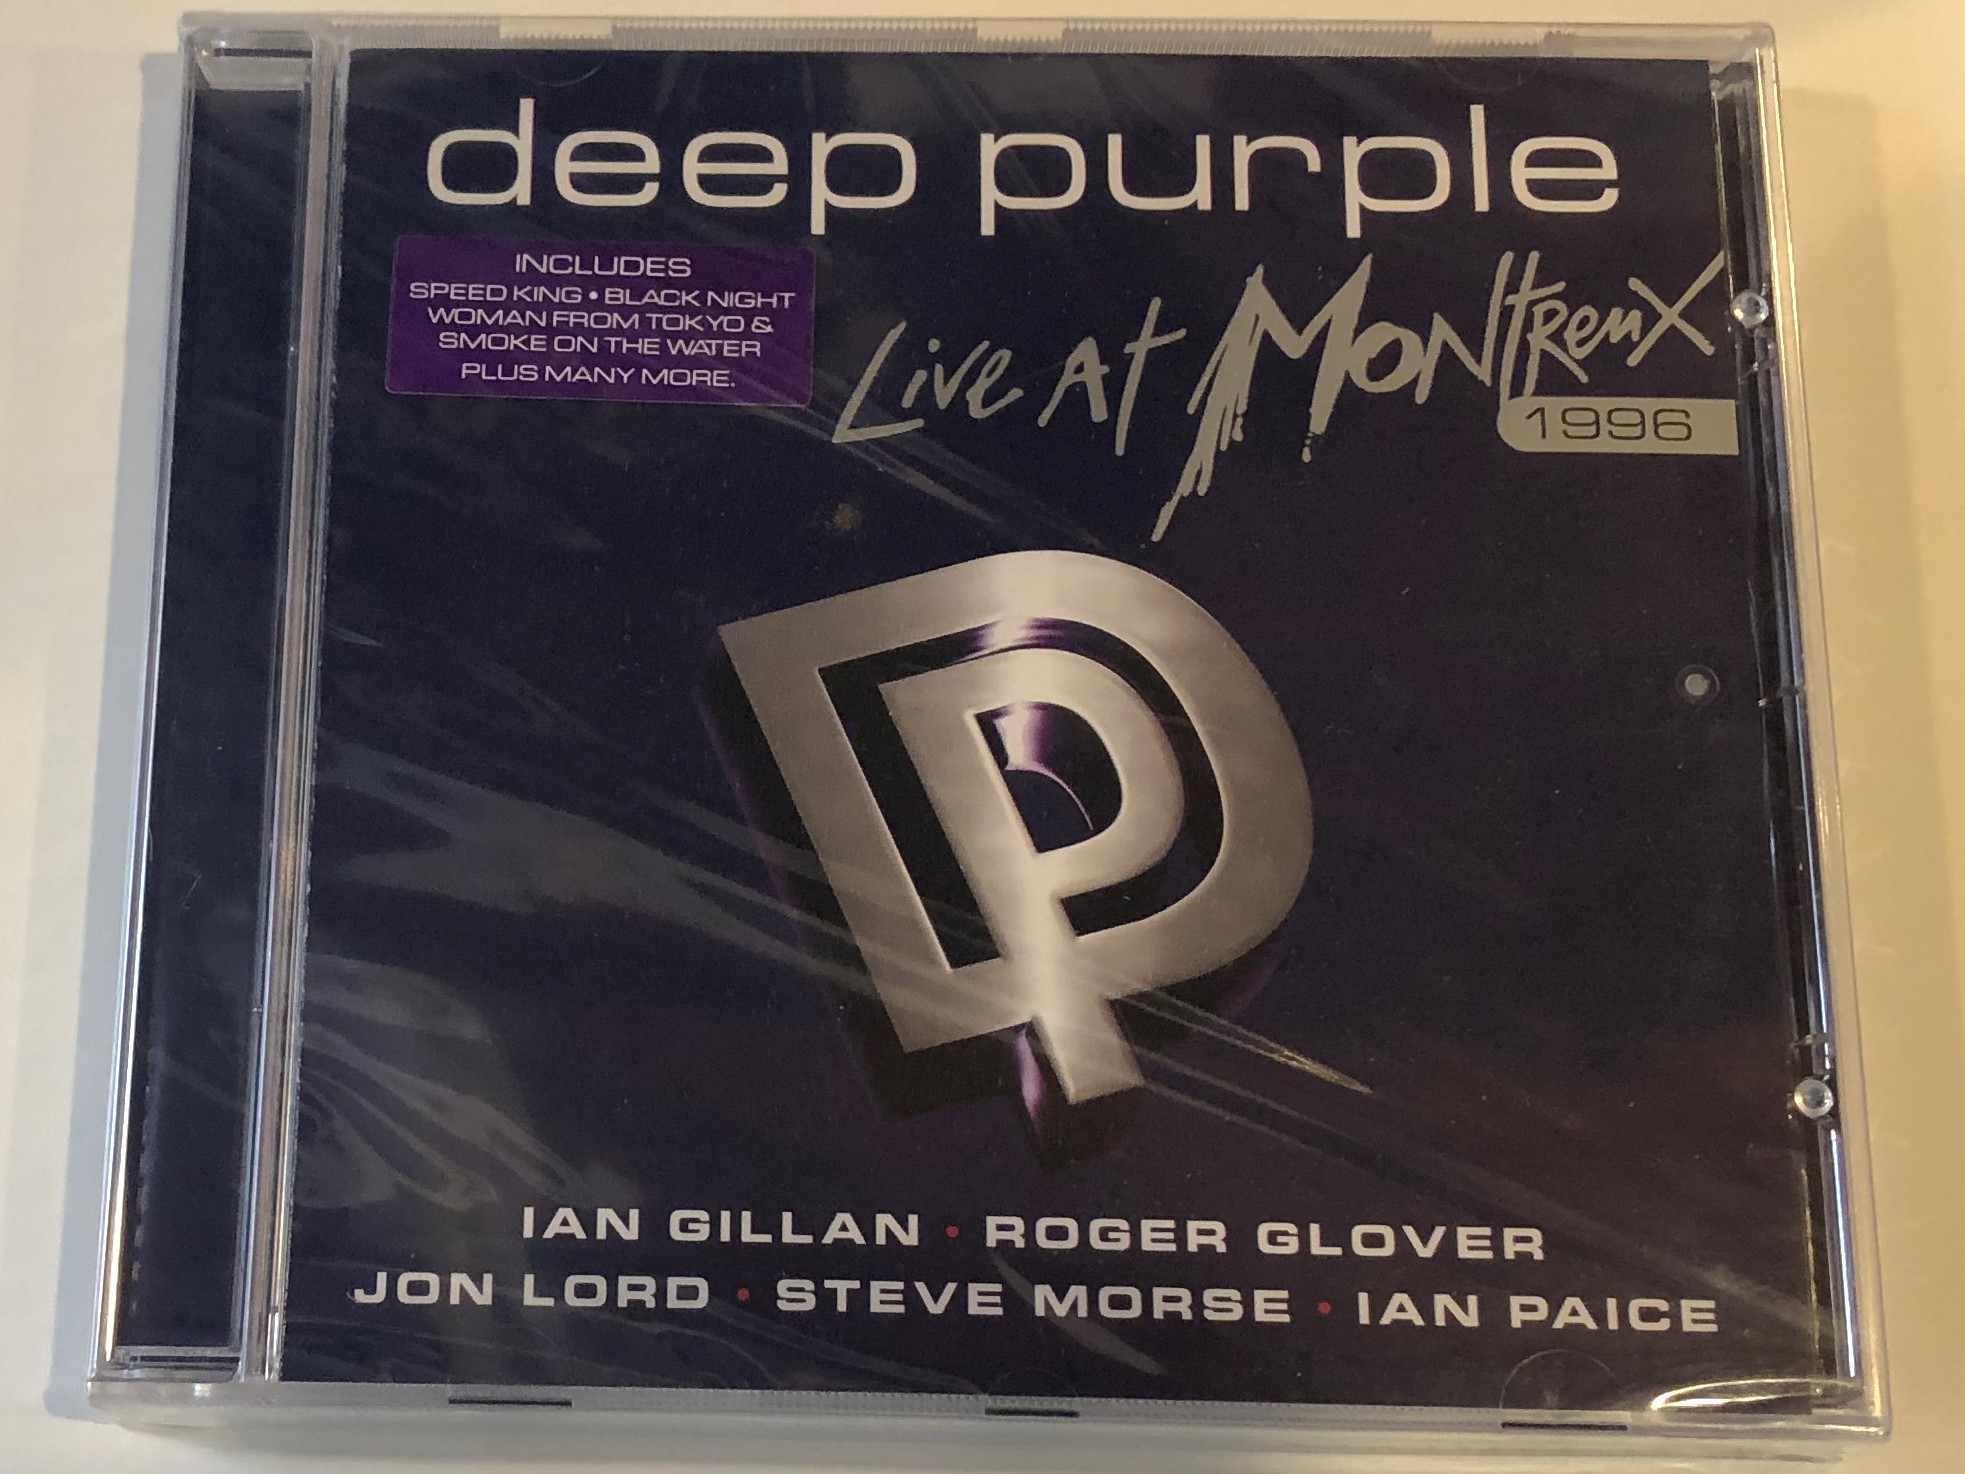 deep-purple-live-at-montreux-1996-ian-gillan-roger-glover-jon-lord-steve-morse-ian-raice-includes-speed-king-black-night-woman-from-tokyo-smoke-on-the-water-plus-mayn-more-eagle-reco-1-.jpg